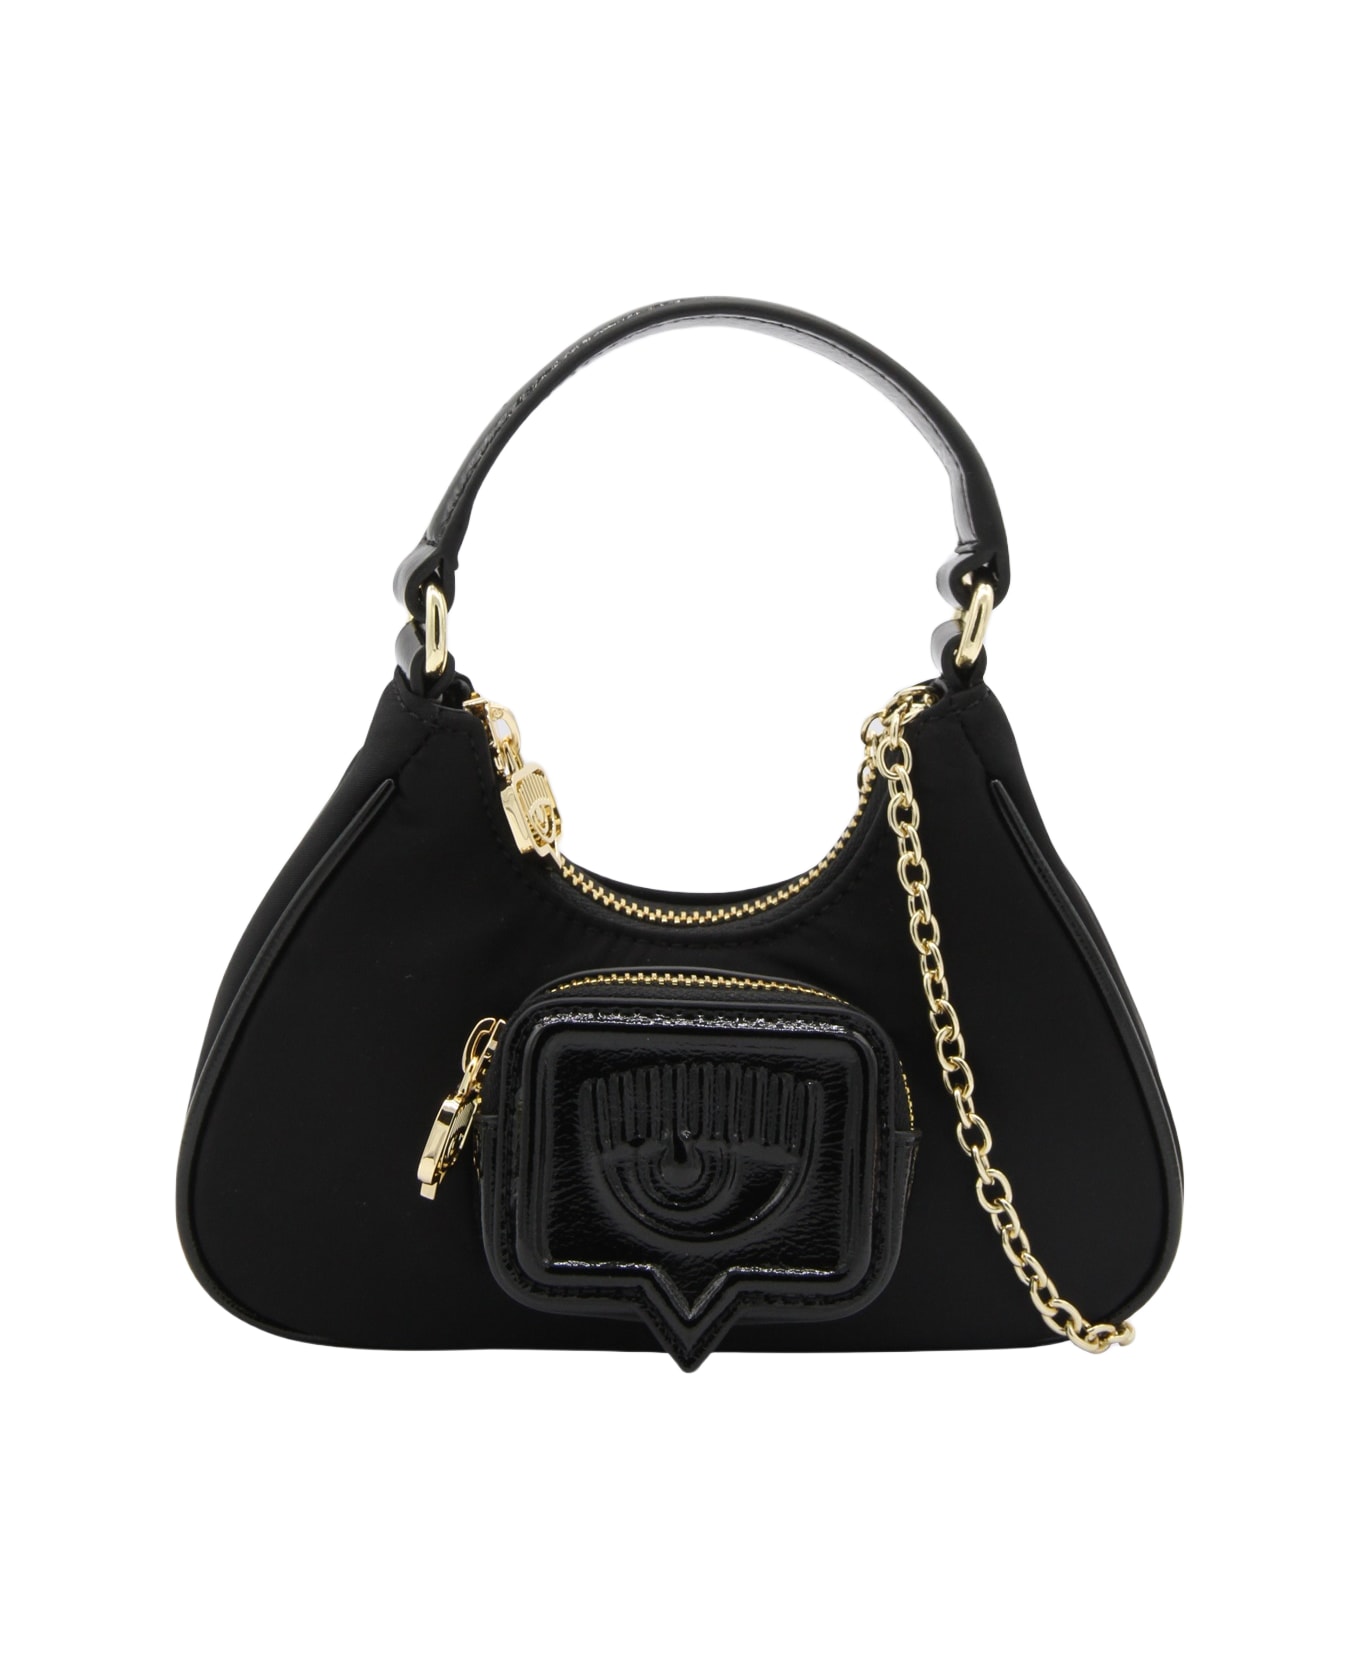 Chiara Ferragni Black Top Handle Bag - Black